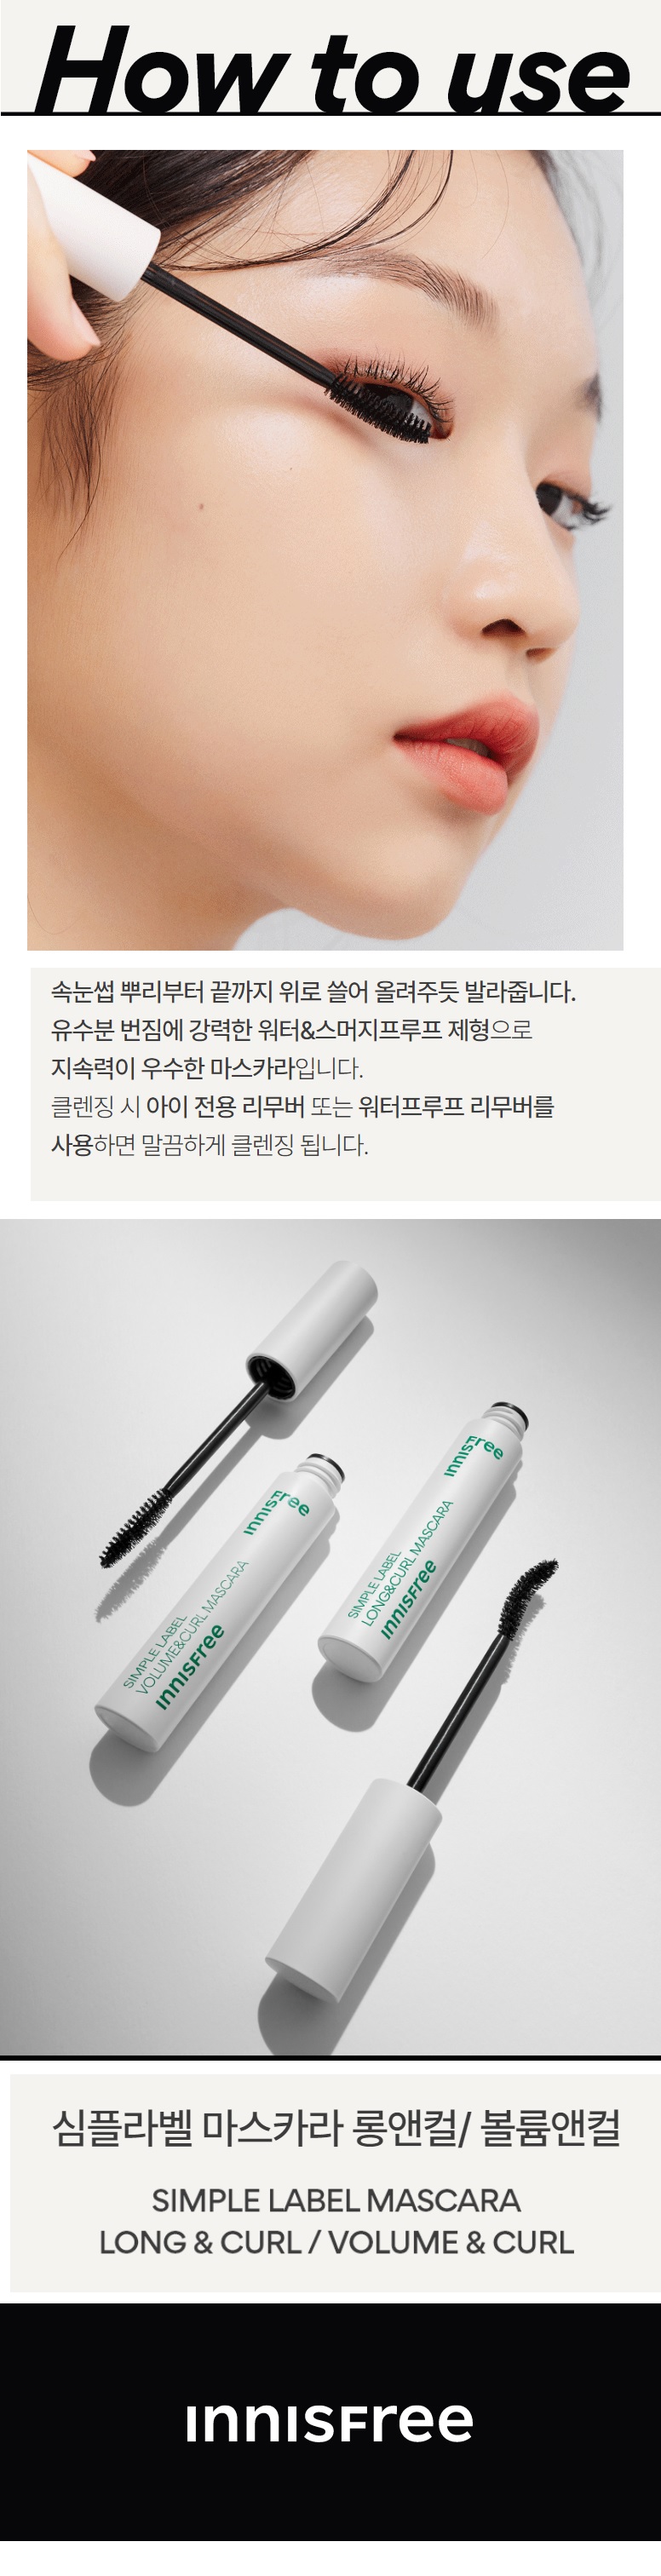 Innisfree Simple Label Mascara korean skincare product online shop malaysia china poland3